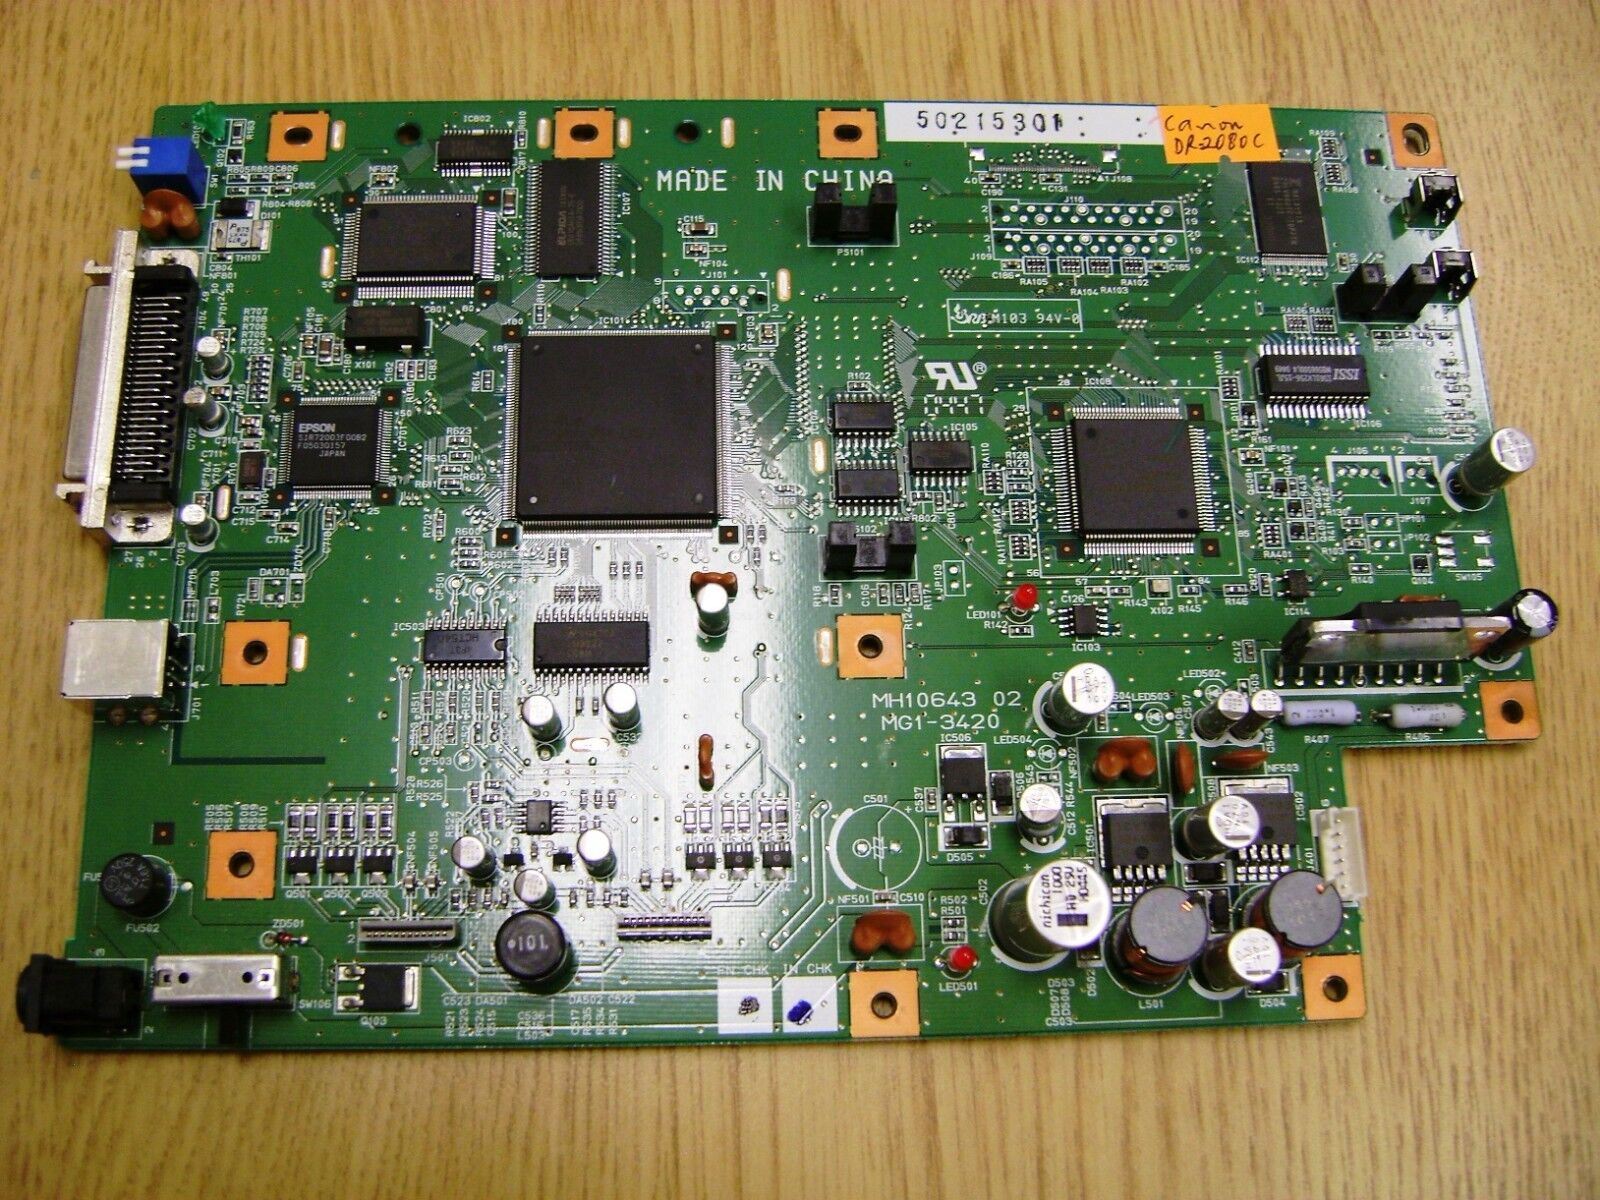 Canon ImageFormula DR?2080C Scanner Main Logic Control Board MG1-3420 MH10643